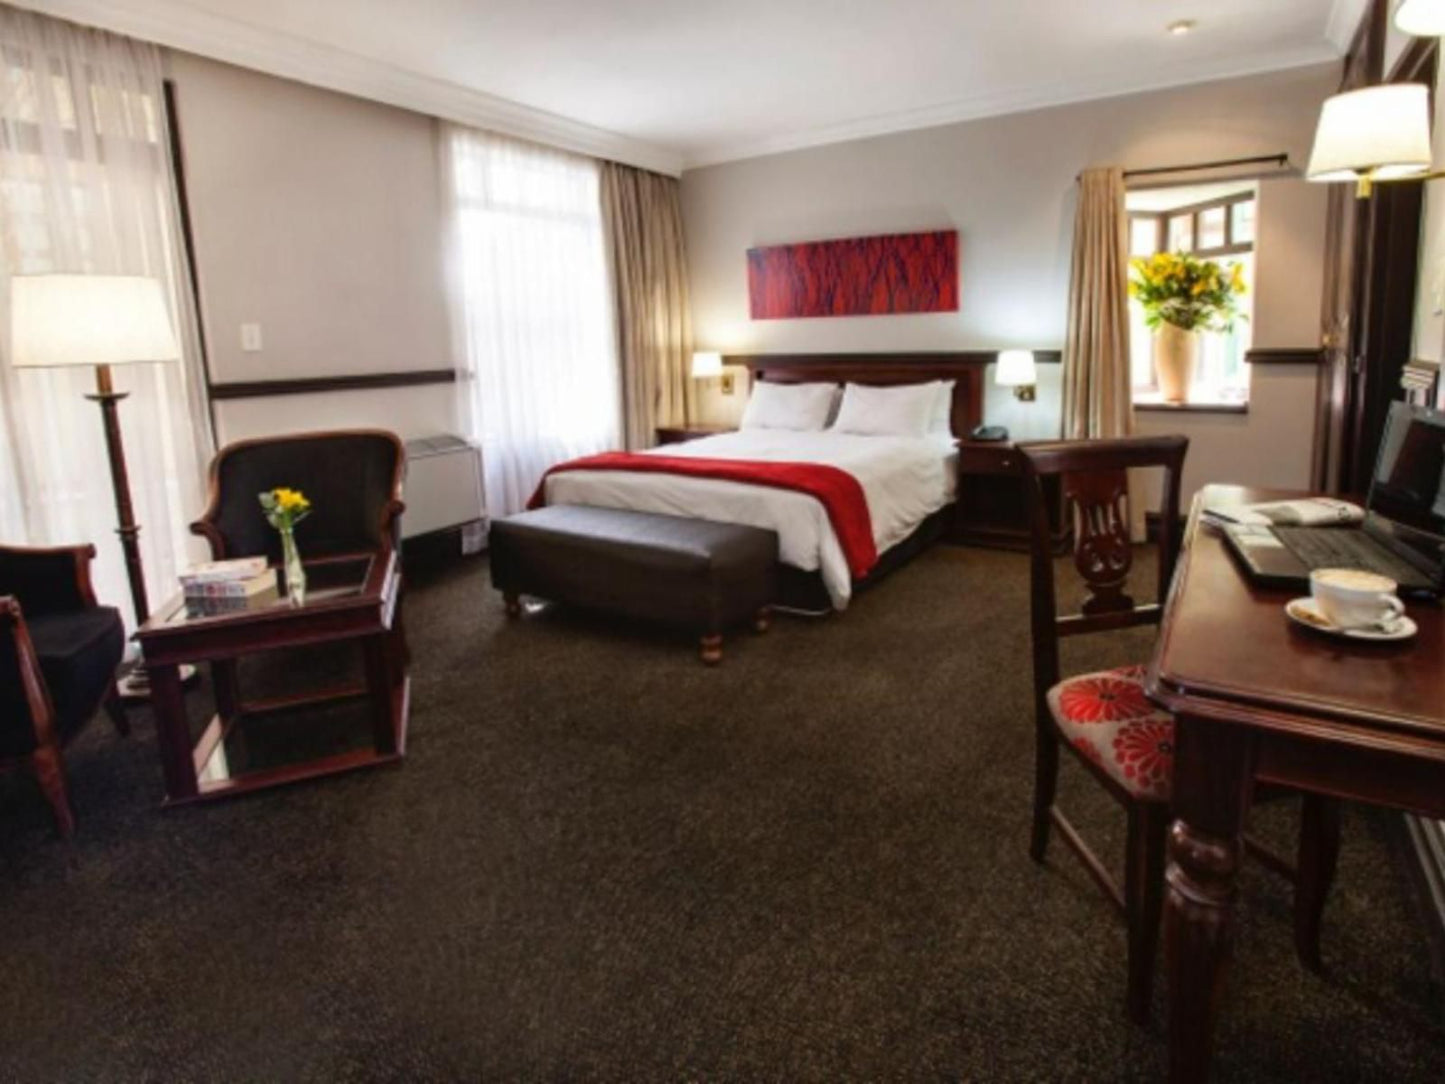 Court Classique Suite Hotel Arcadia Pretoria Tshwane Gauteng South Africa Bedroom